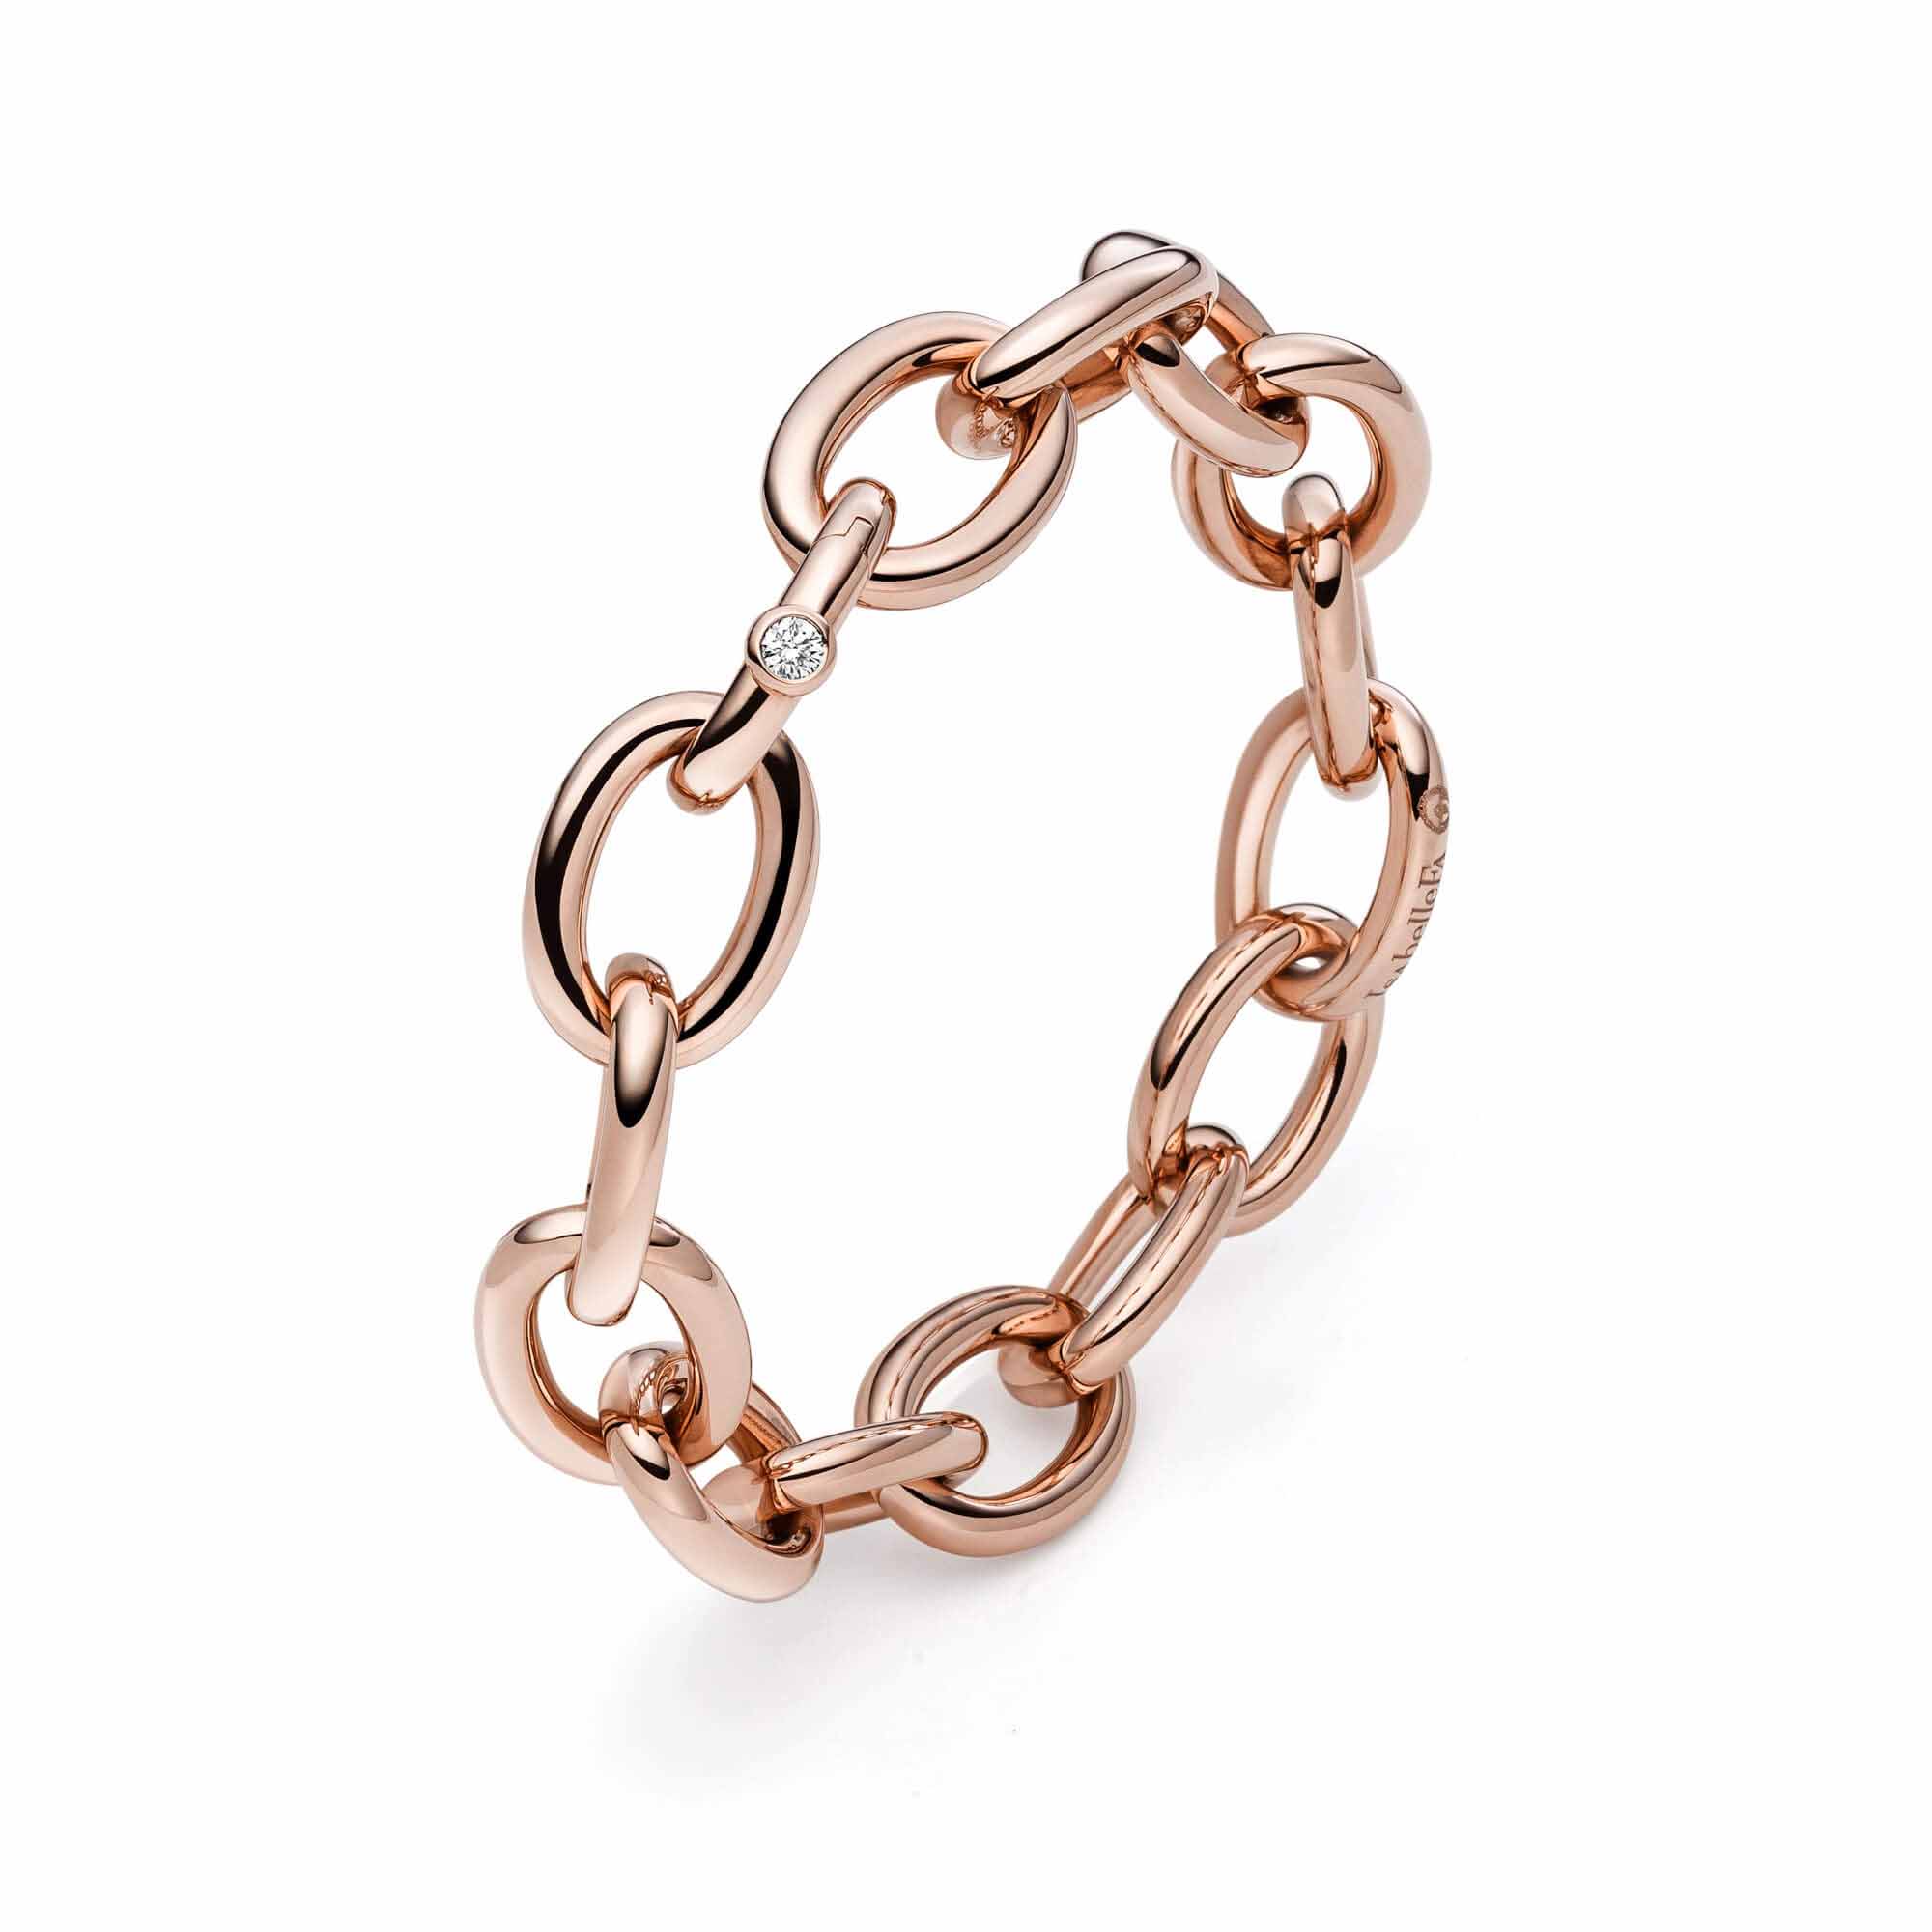 OEM ODM 18k rose gold bracelet from designed custom jewelry wholesaler